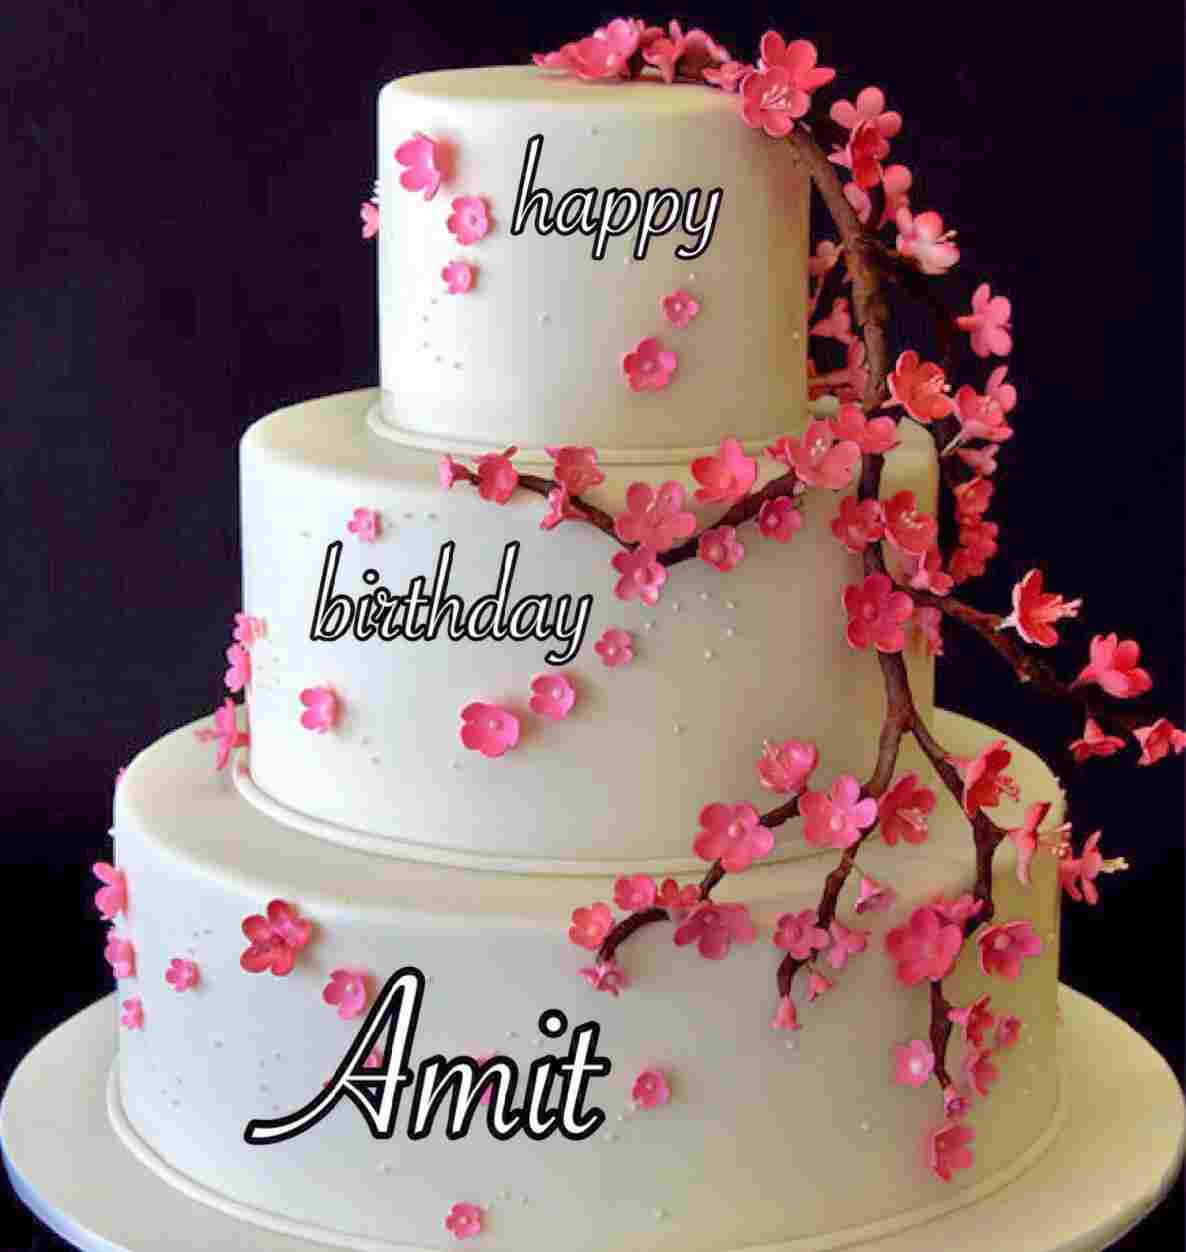 happy birthday wallpaper,cake,sugar paste,cake decorating,fondant,birthday cake